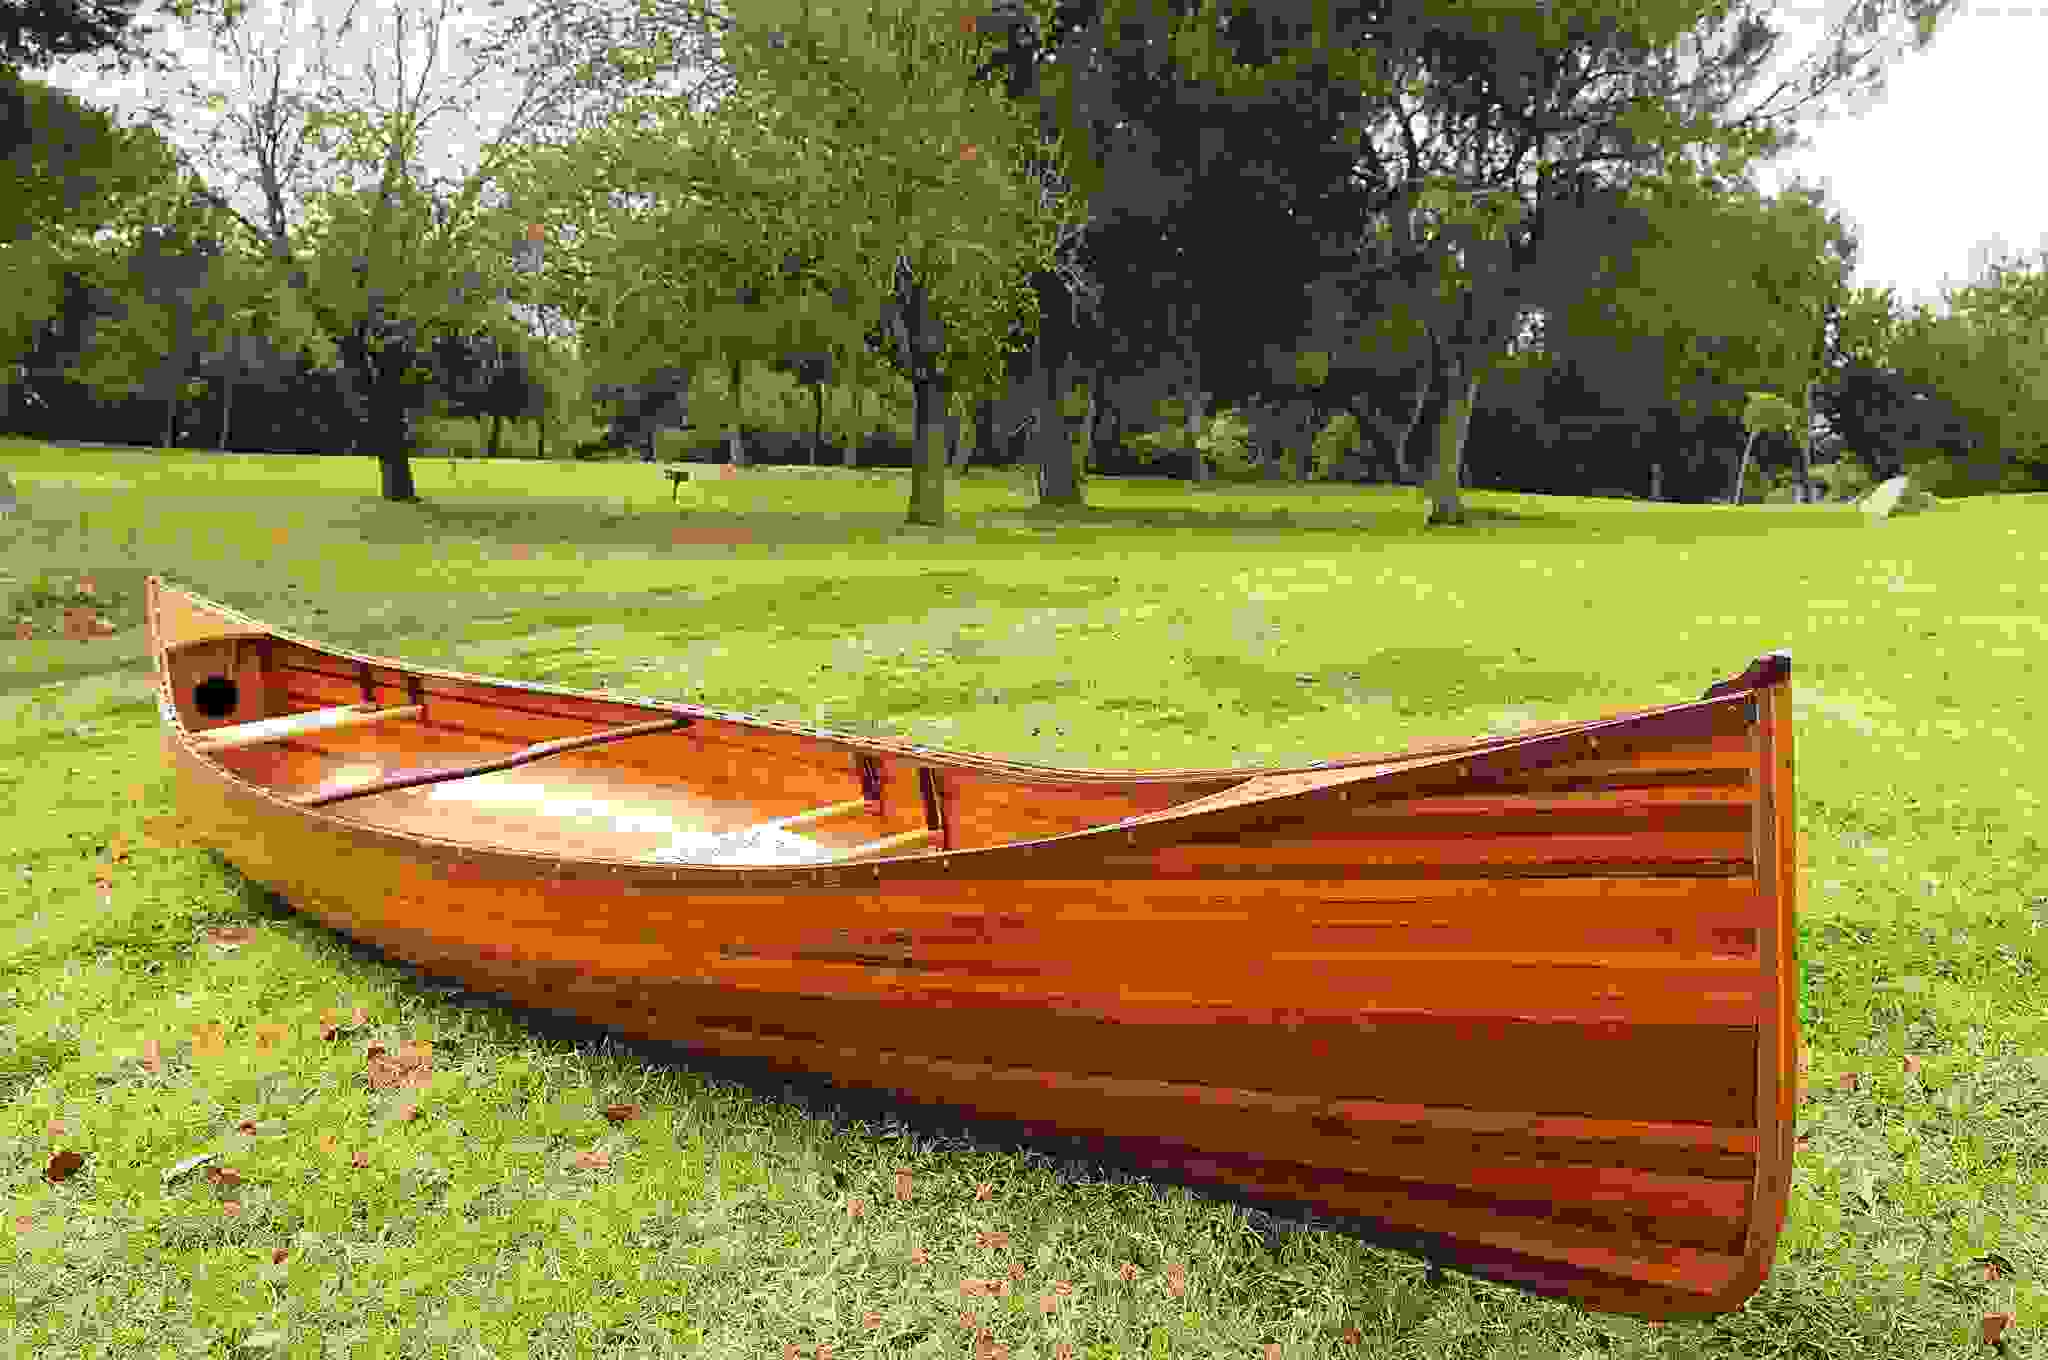 35.5" x 216" x 27" Wooden Canoe